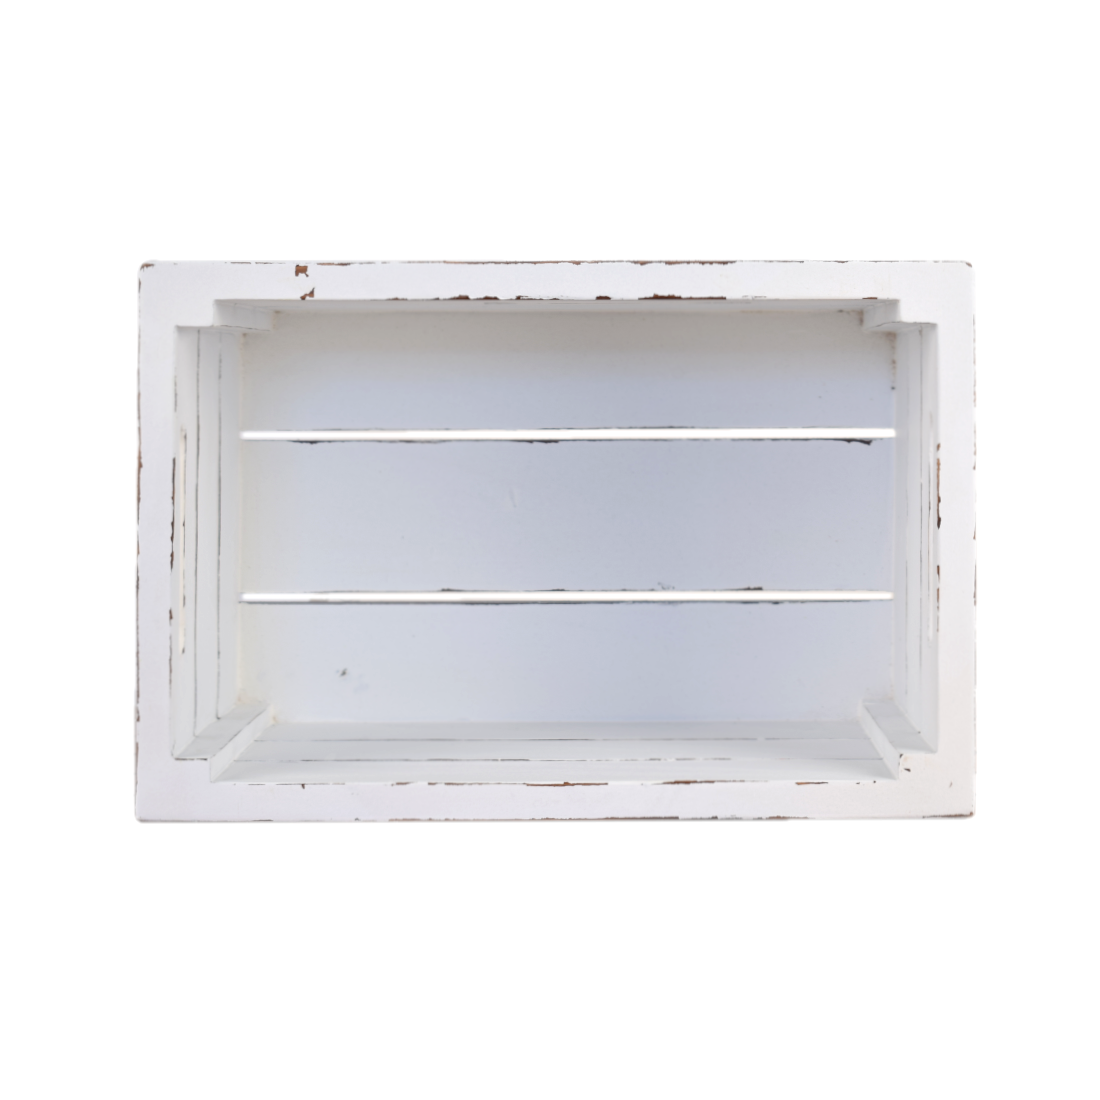 CustHum-Crate-multipurpose pallet crate box (distressed white, top view)